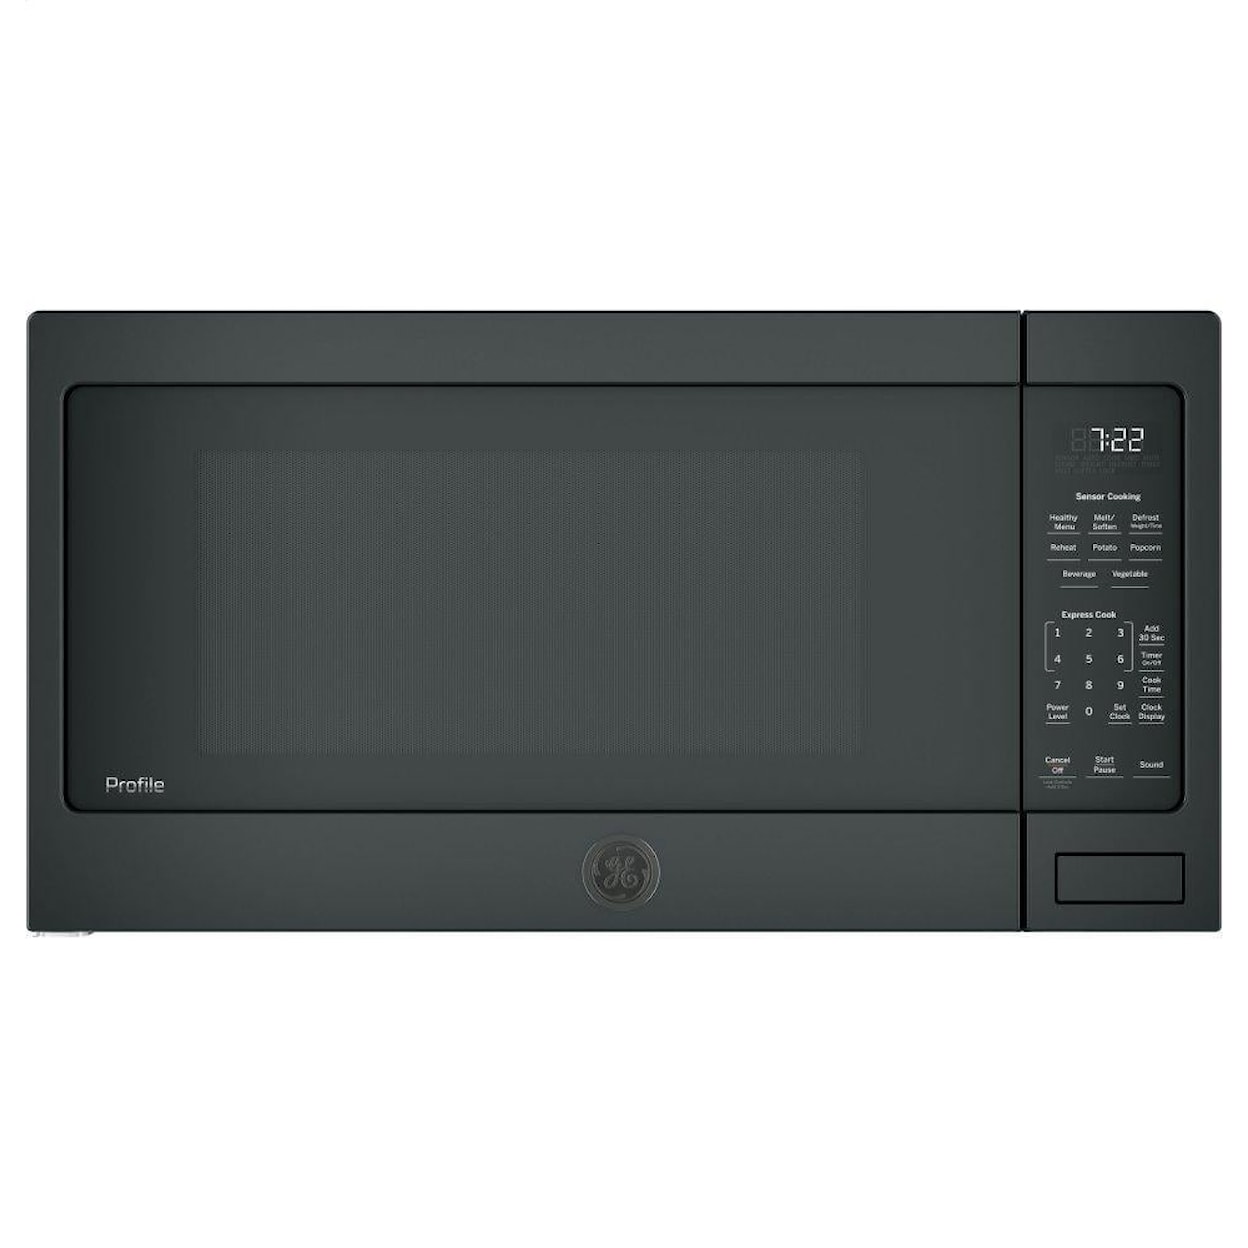 GE Appliances Microwave Countertop Microwave